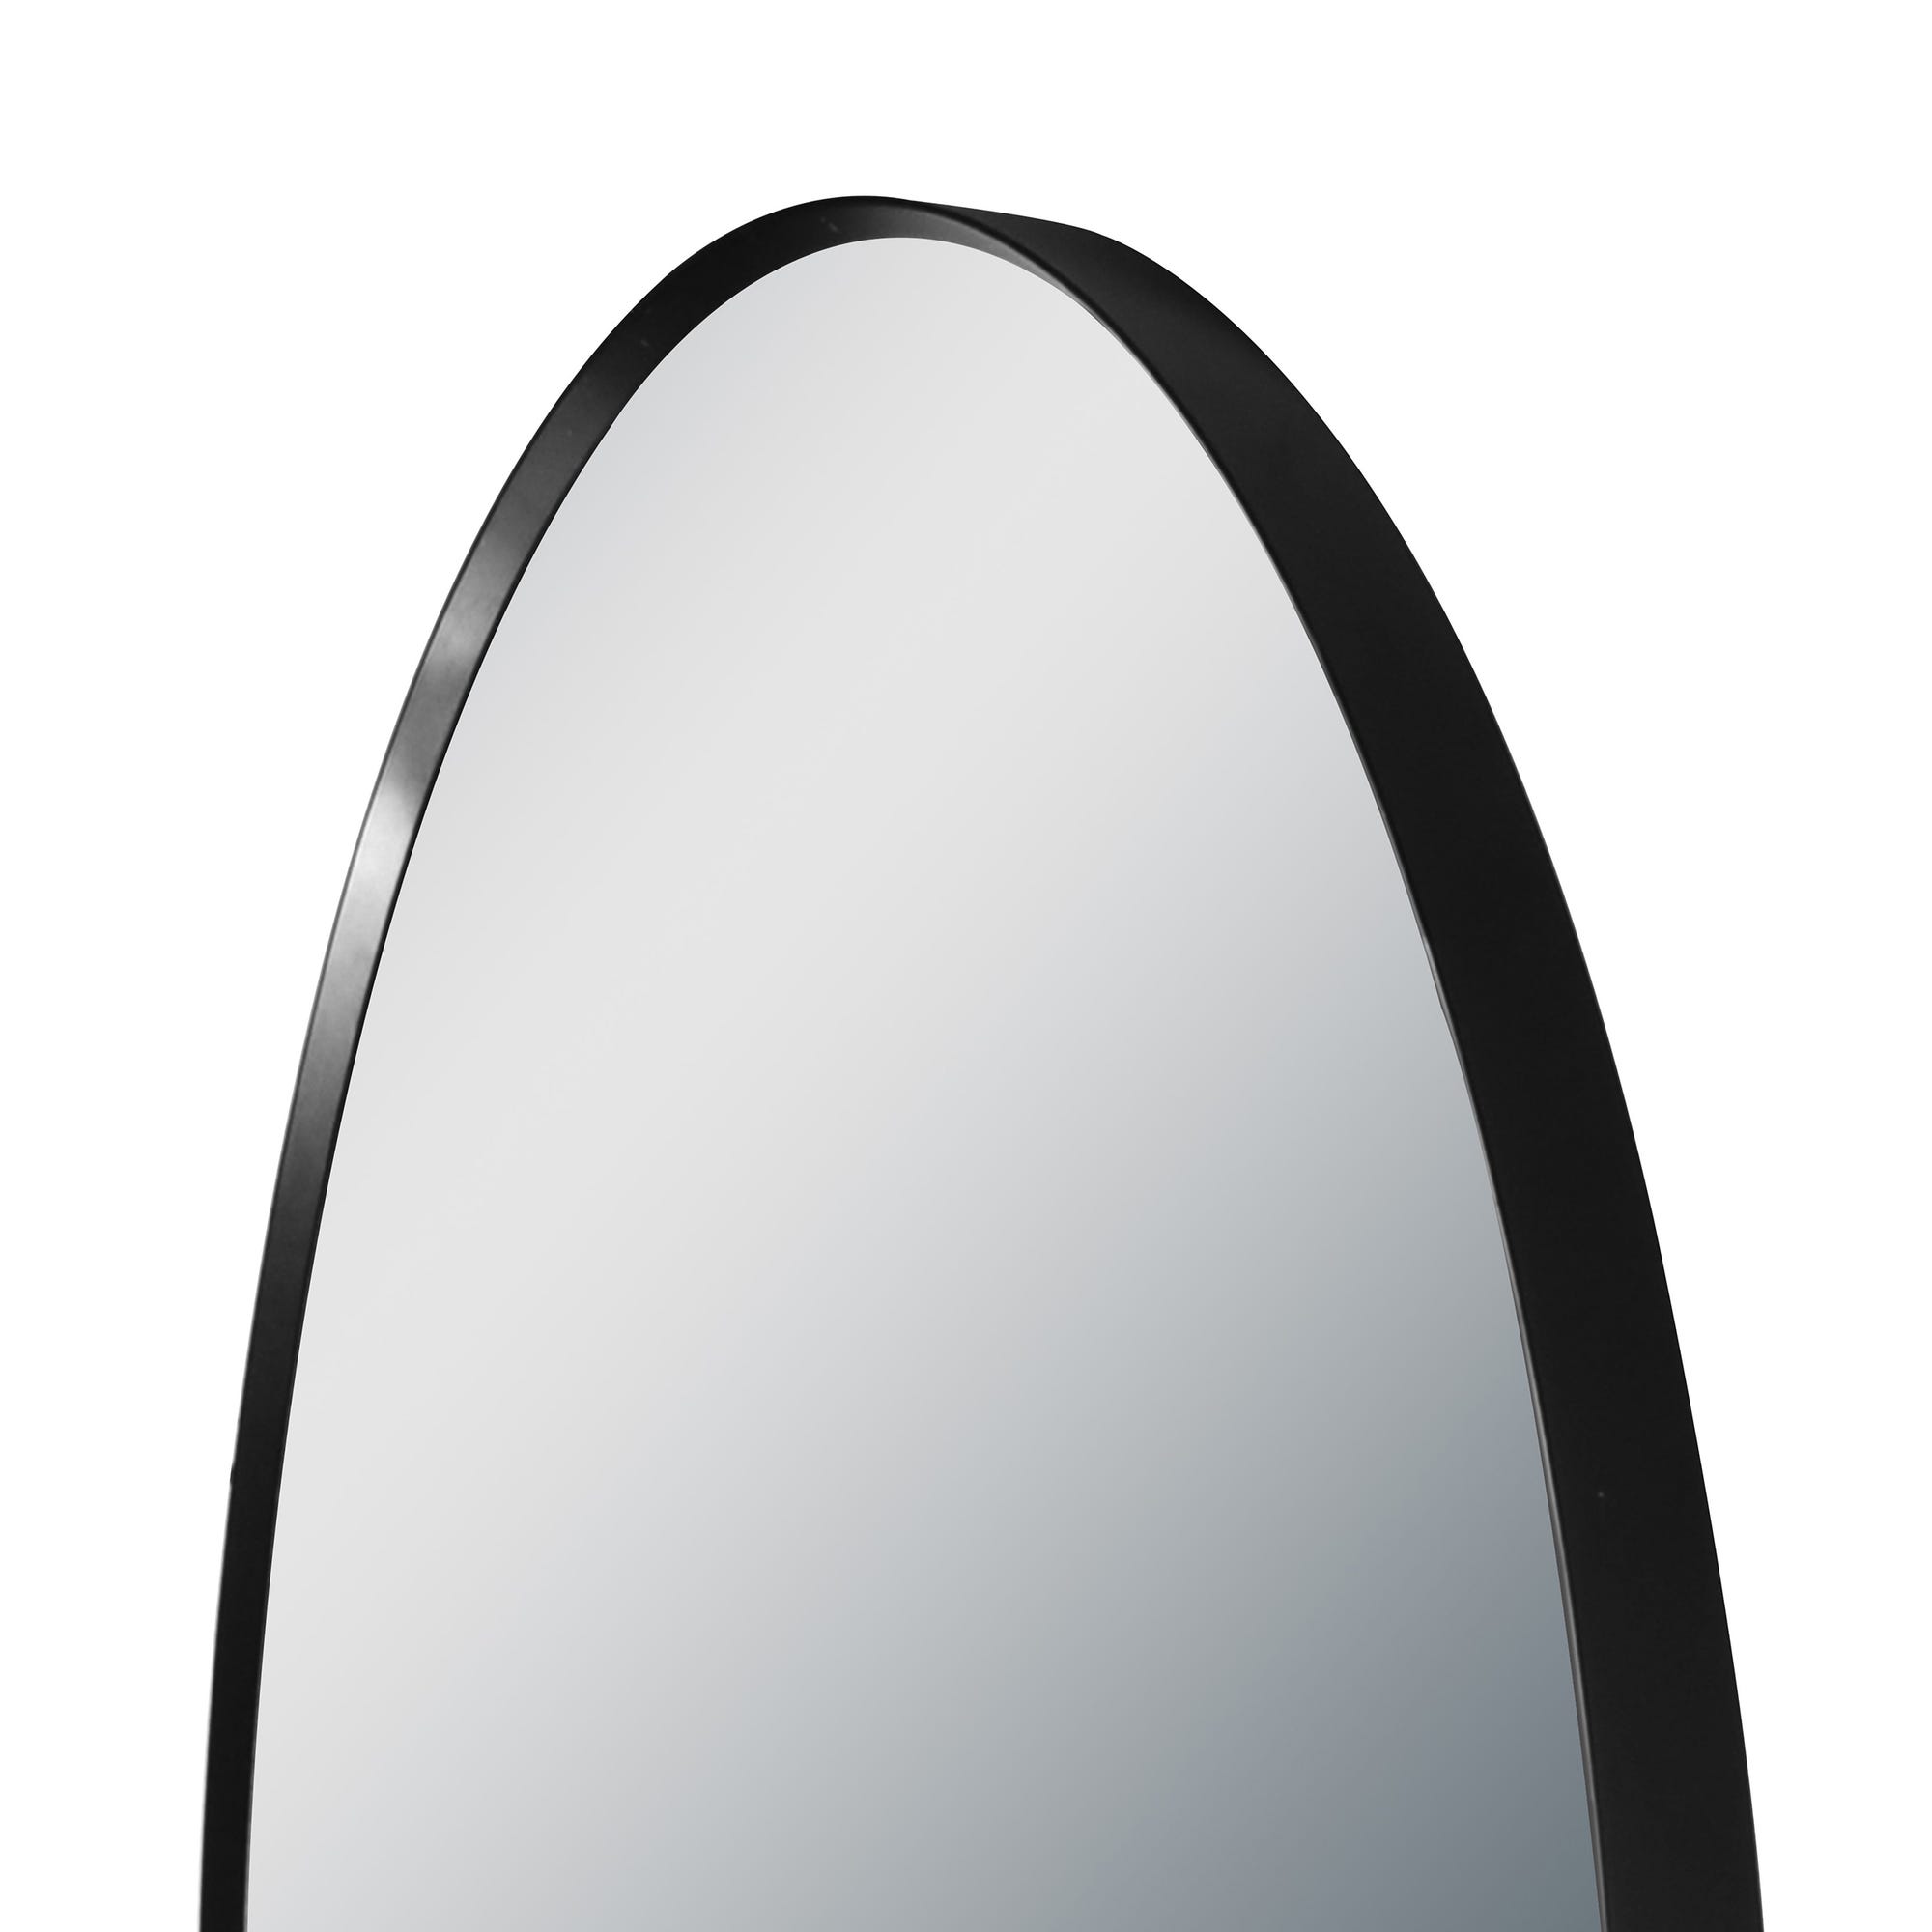 Miroir salle de bain circulaire 60cm de diametre - finition noir mat - RING DARK 60 1